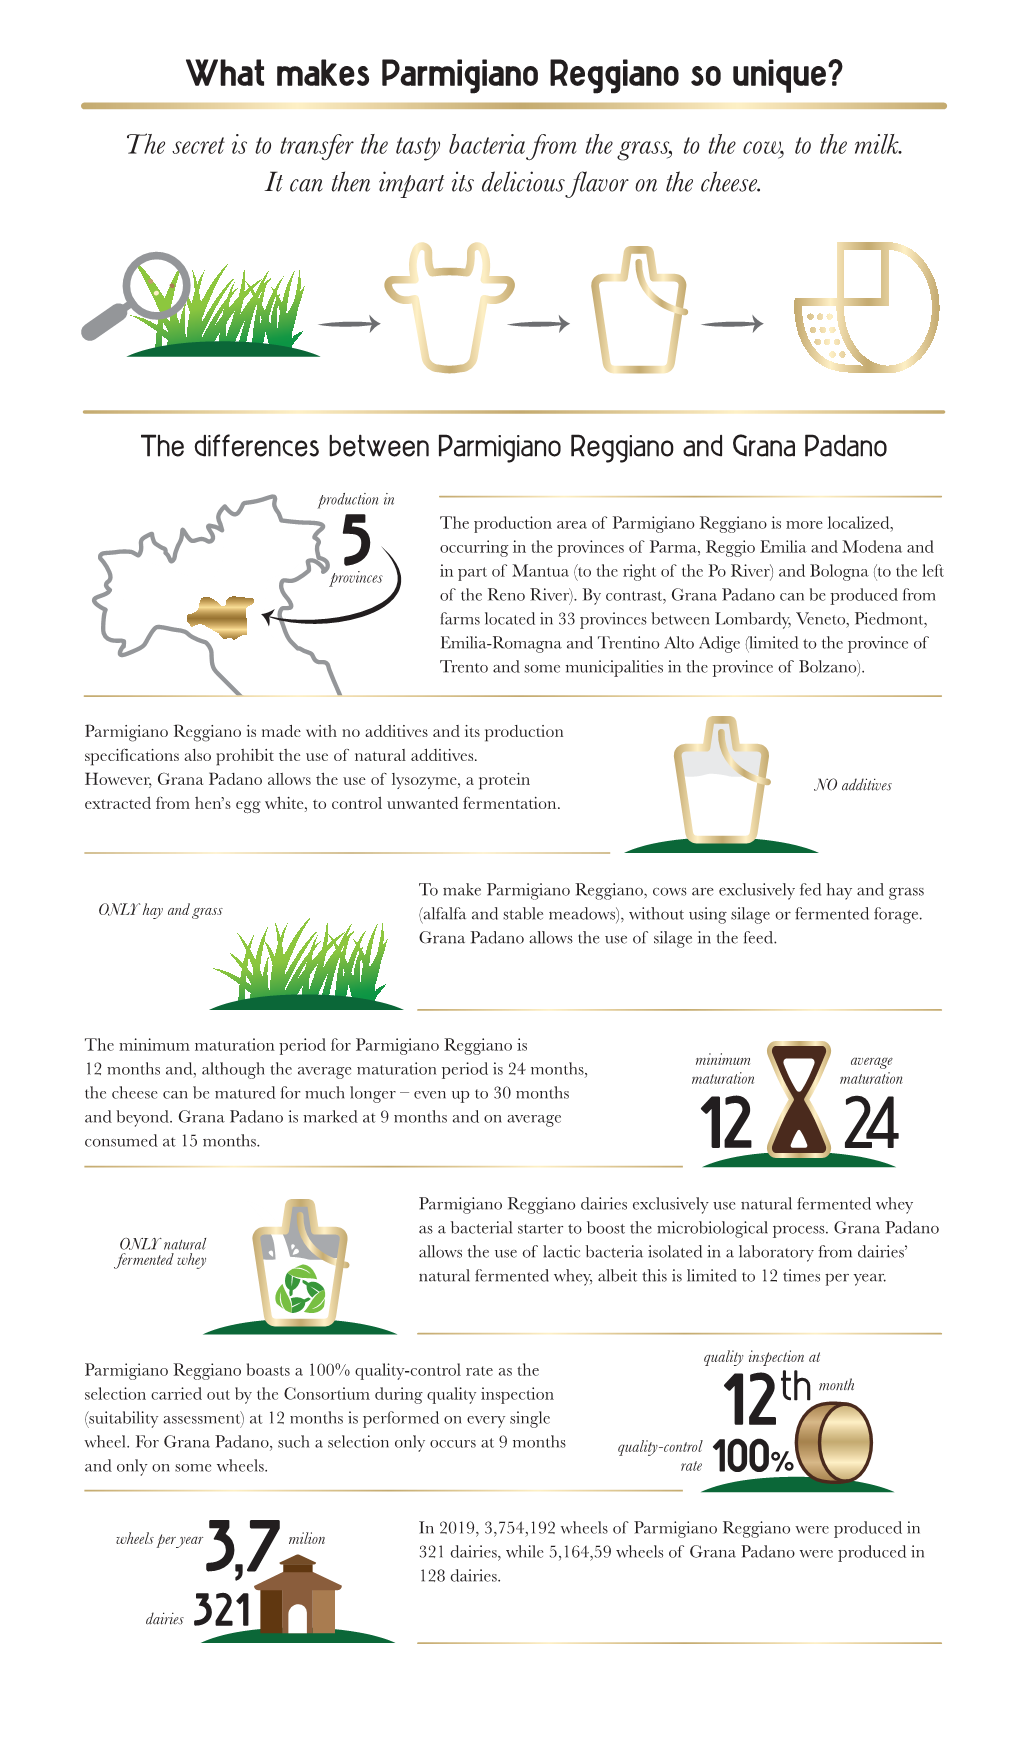 The Differences Between Parmigiano Reggiano and Grana Padano